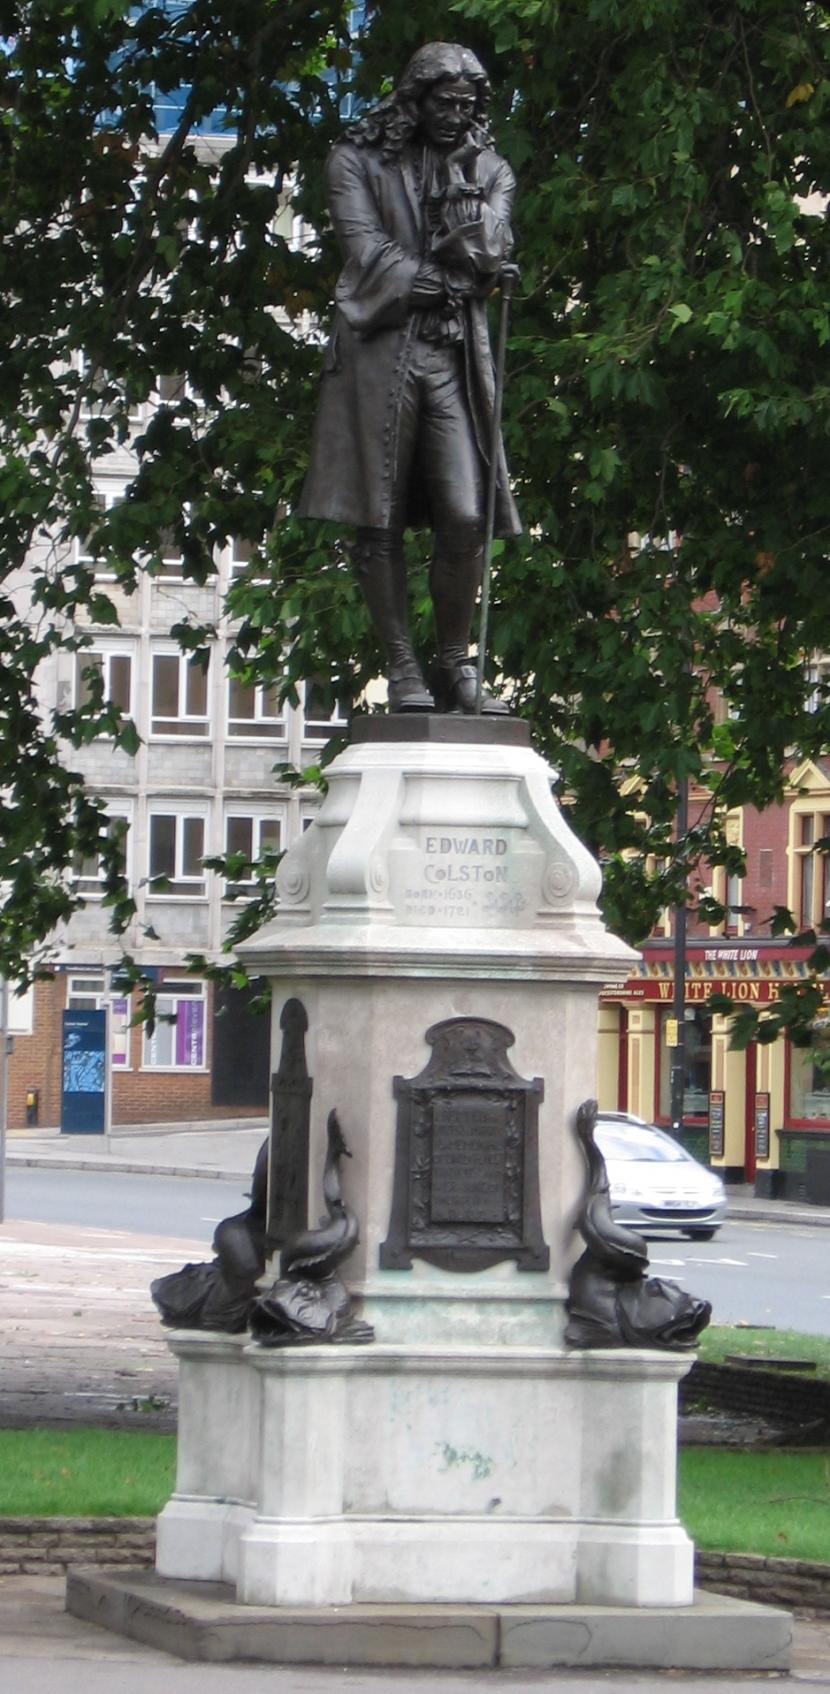 Patung Edward Colston di Bristol, Inggris